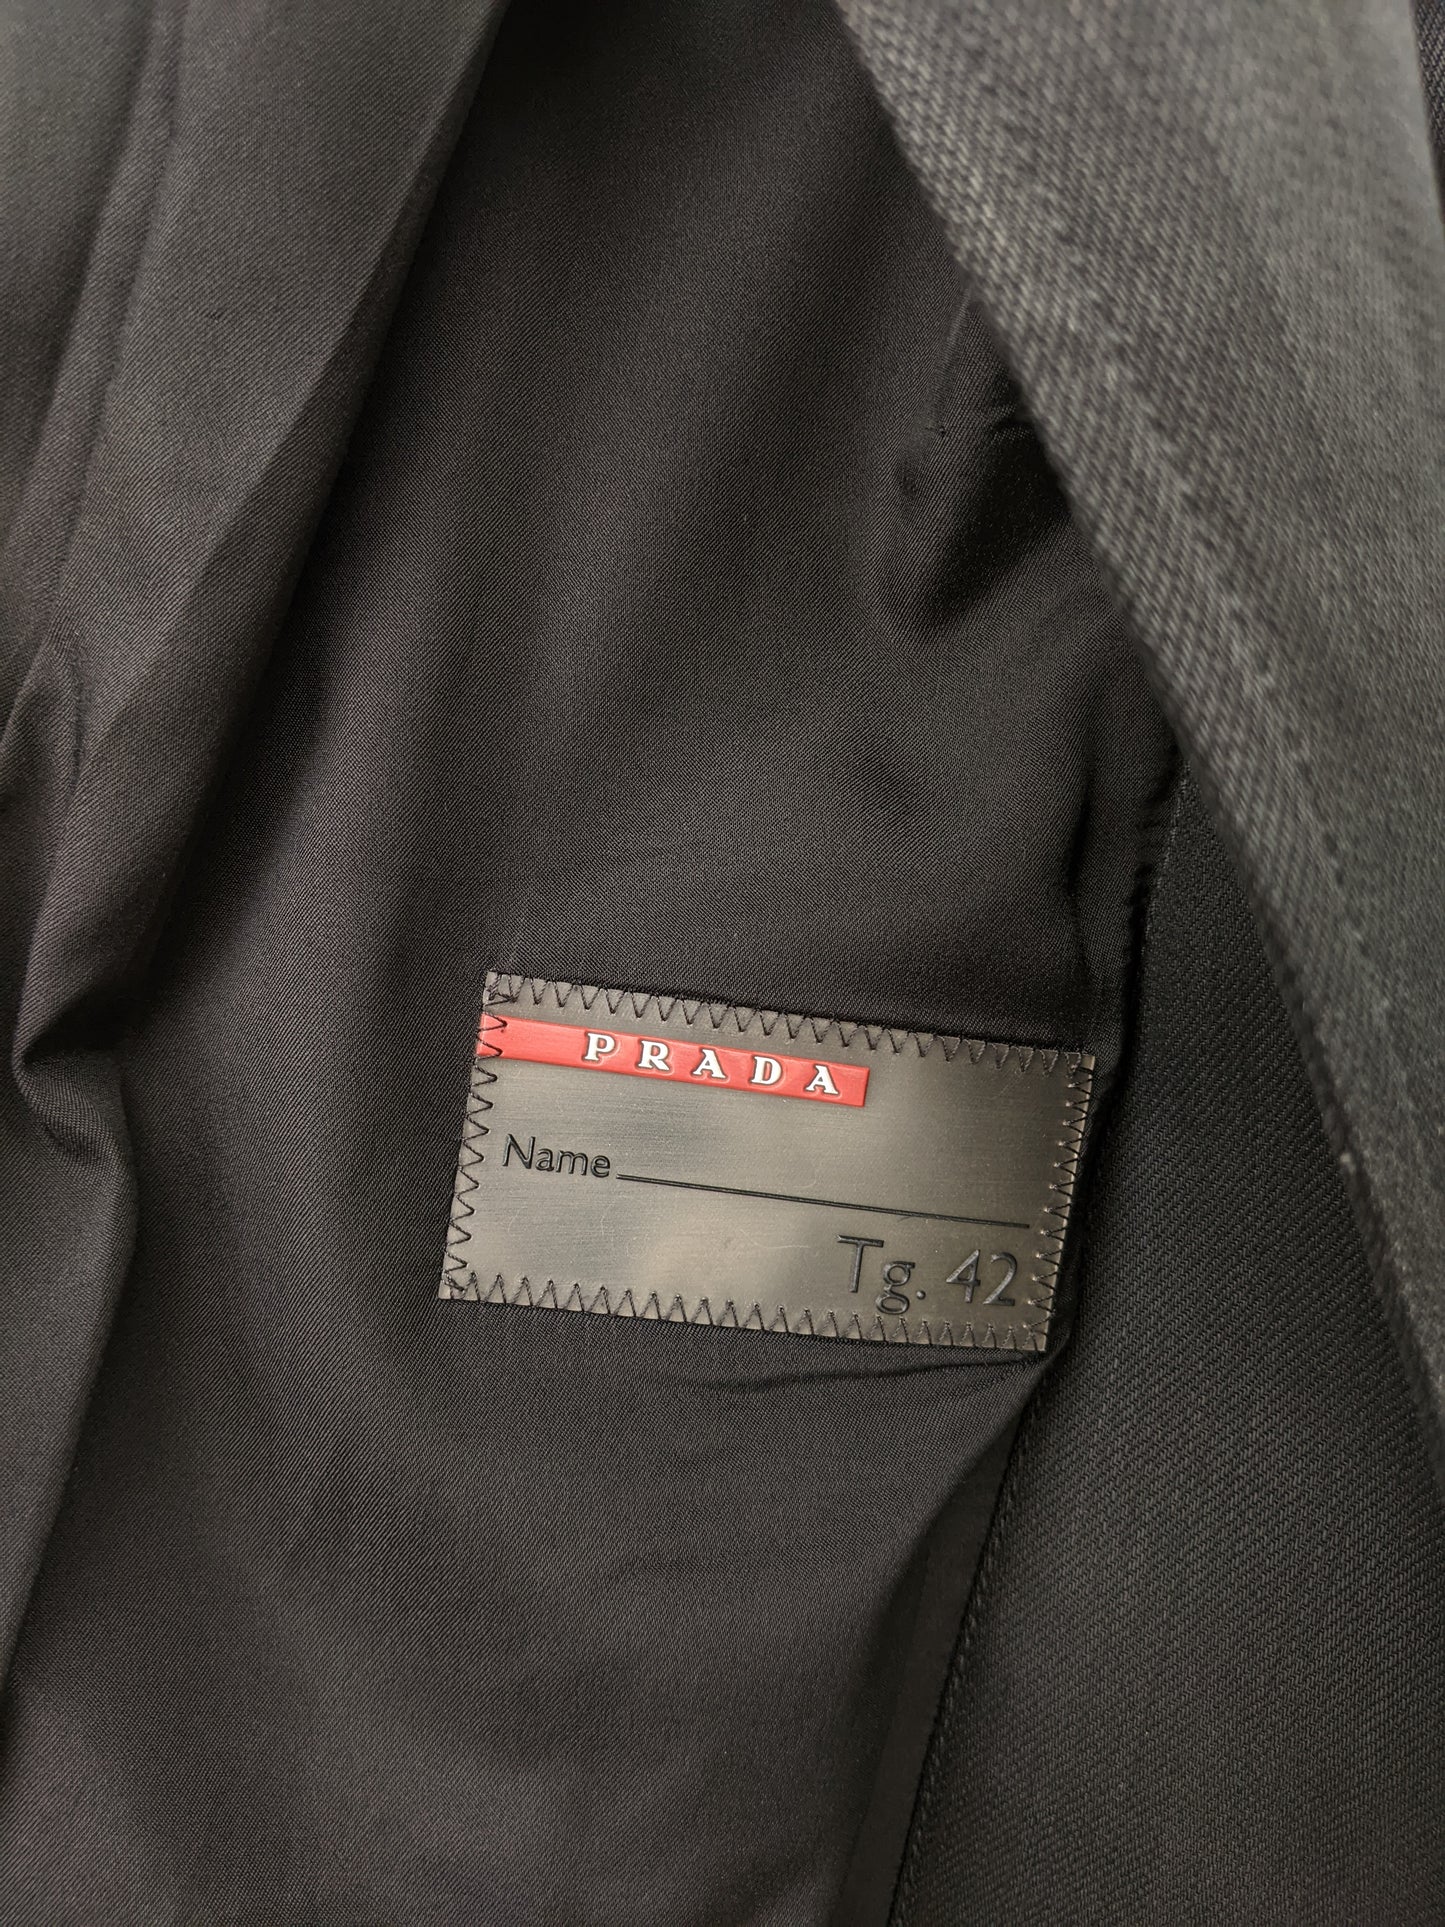 Prada jacket sz eu 42 (fits S/M)